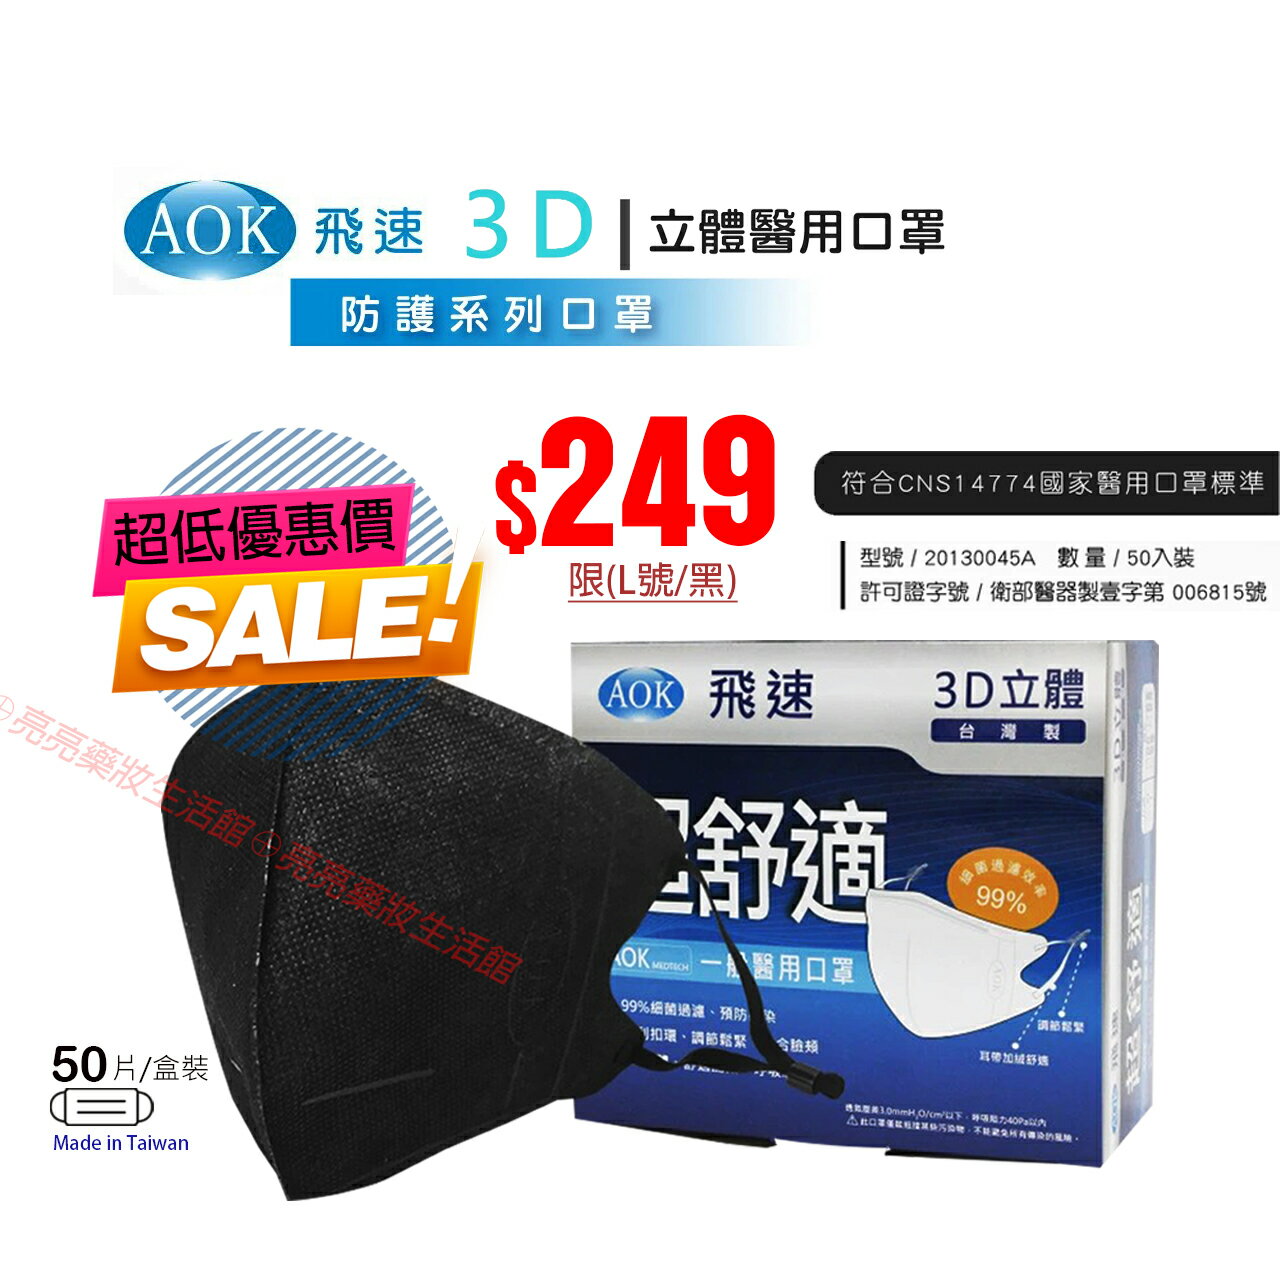 AOK 醫用成人 立體口罩 3D立體口罩 L 深黑色 50入/盒 台灣製